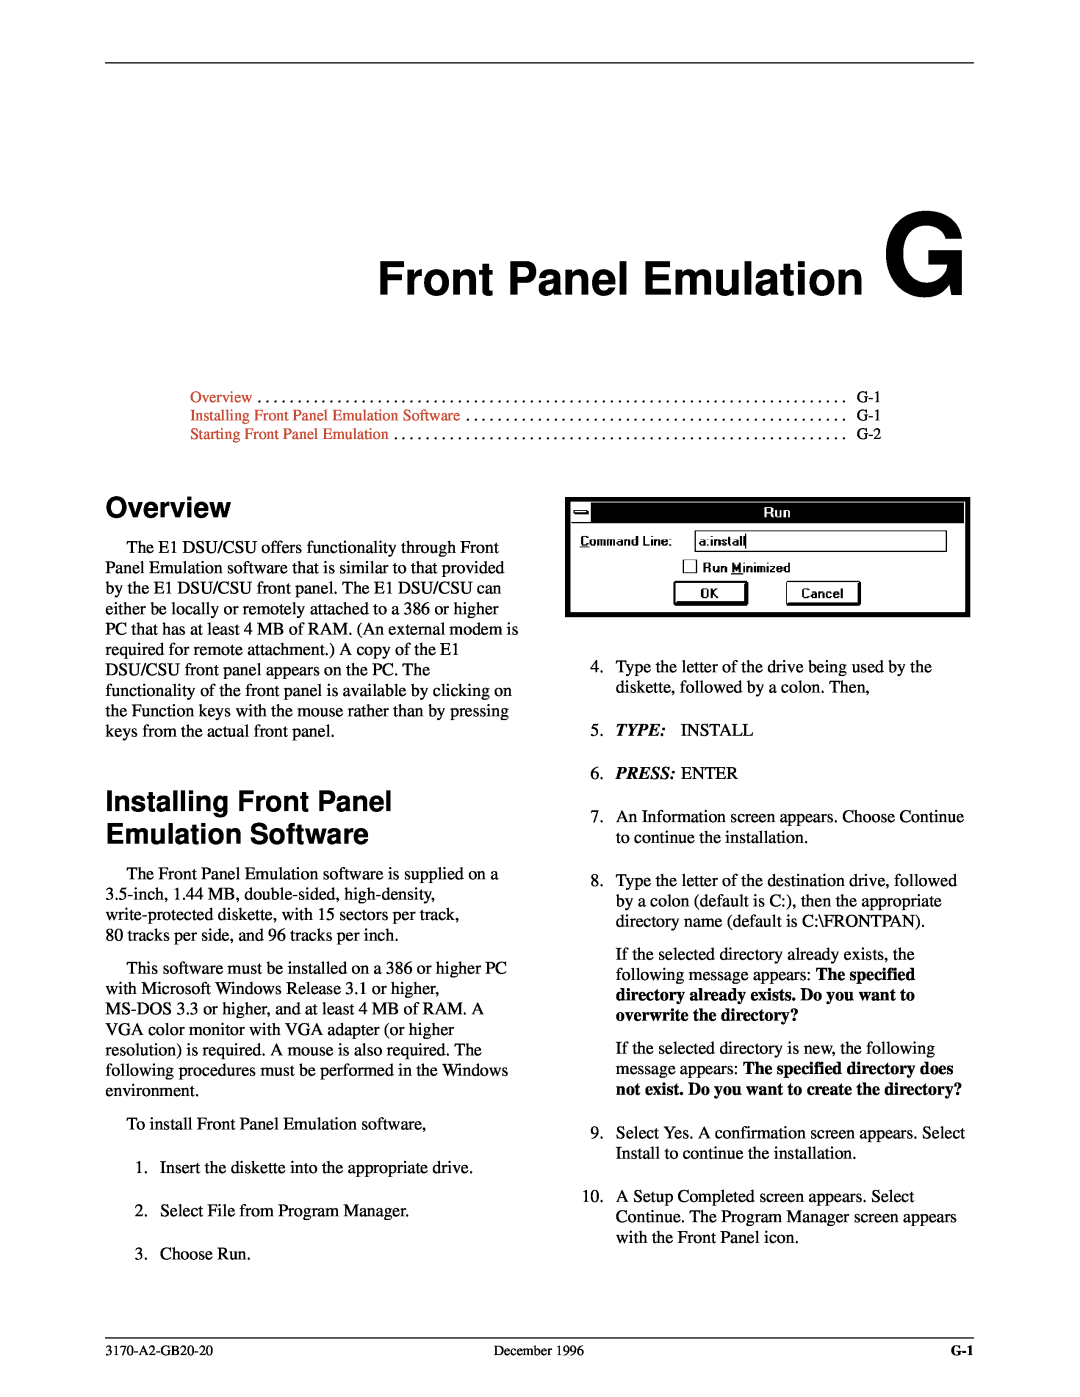 Paradyne 317x E1 manual Front Panel Emulation G, Installing Front Panel Emulation Software, Overview, Press Enter 